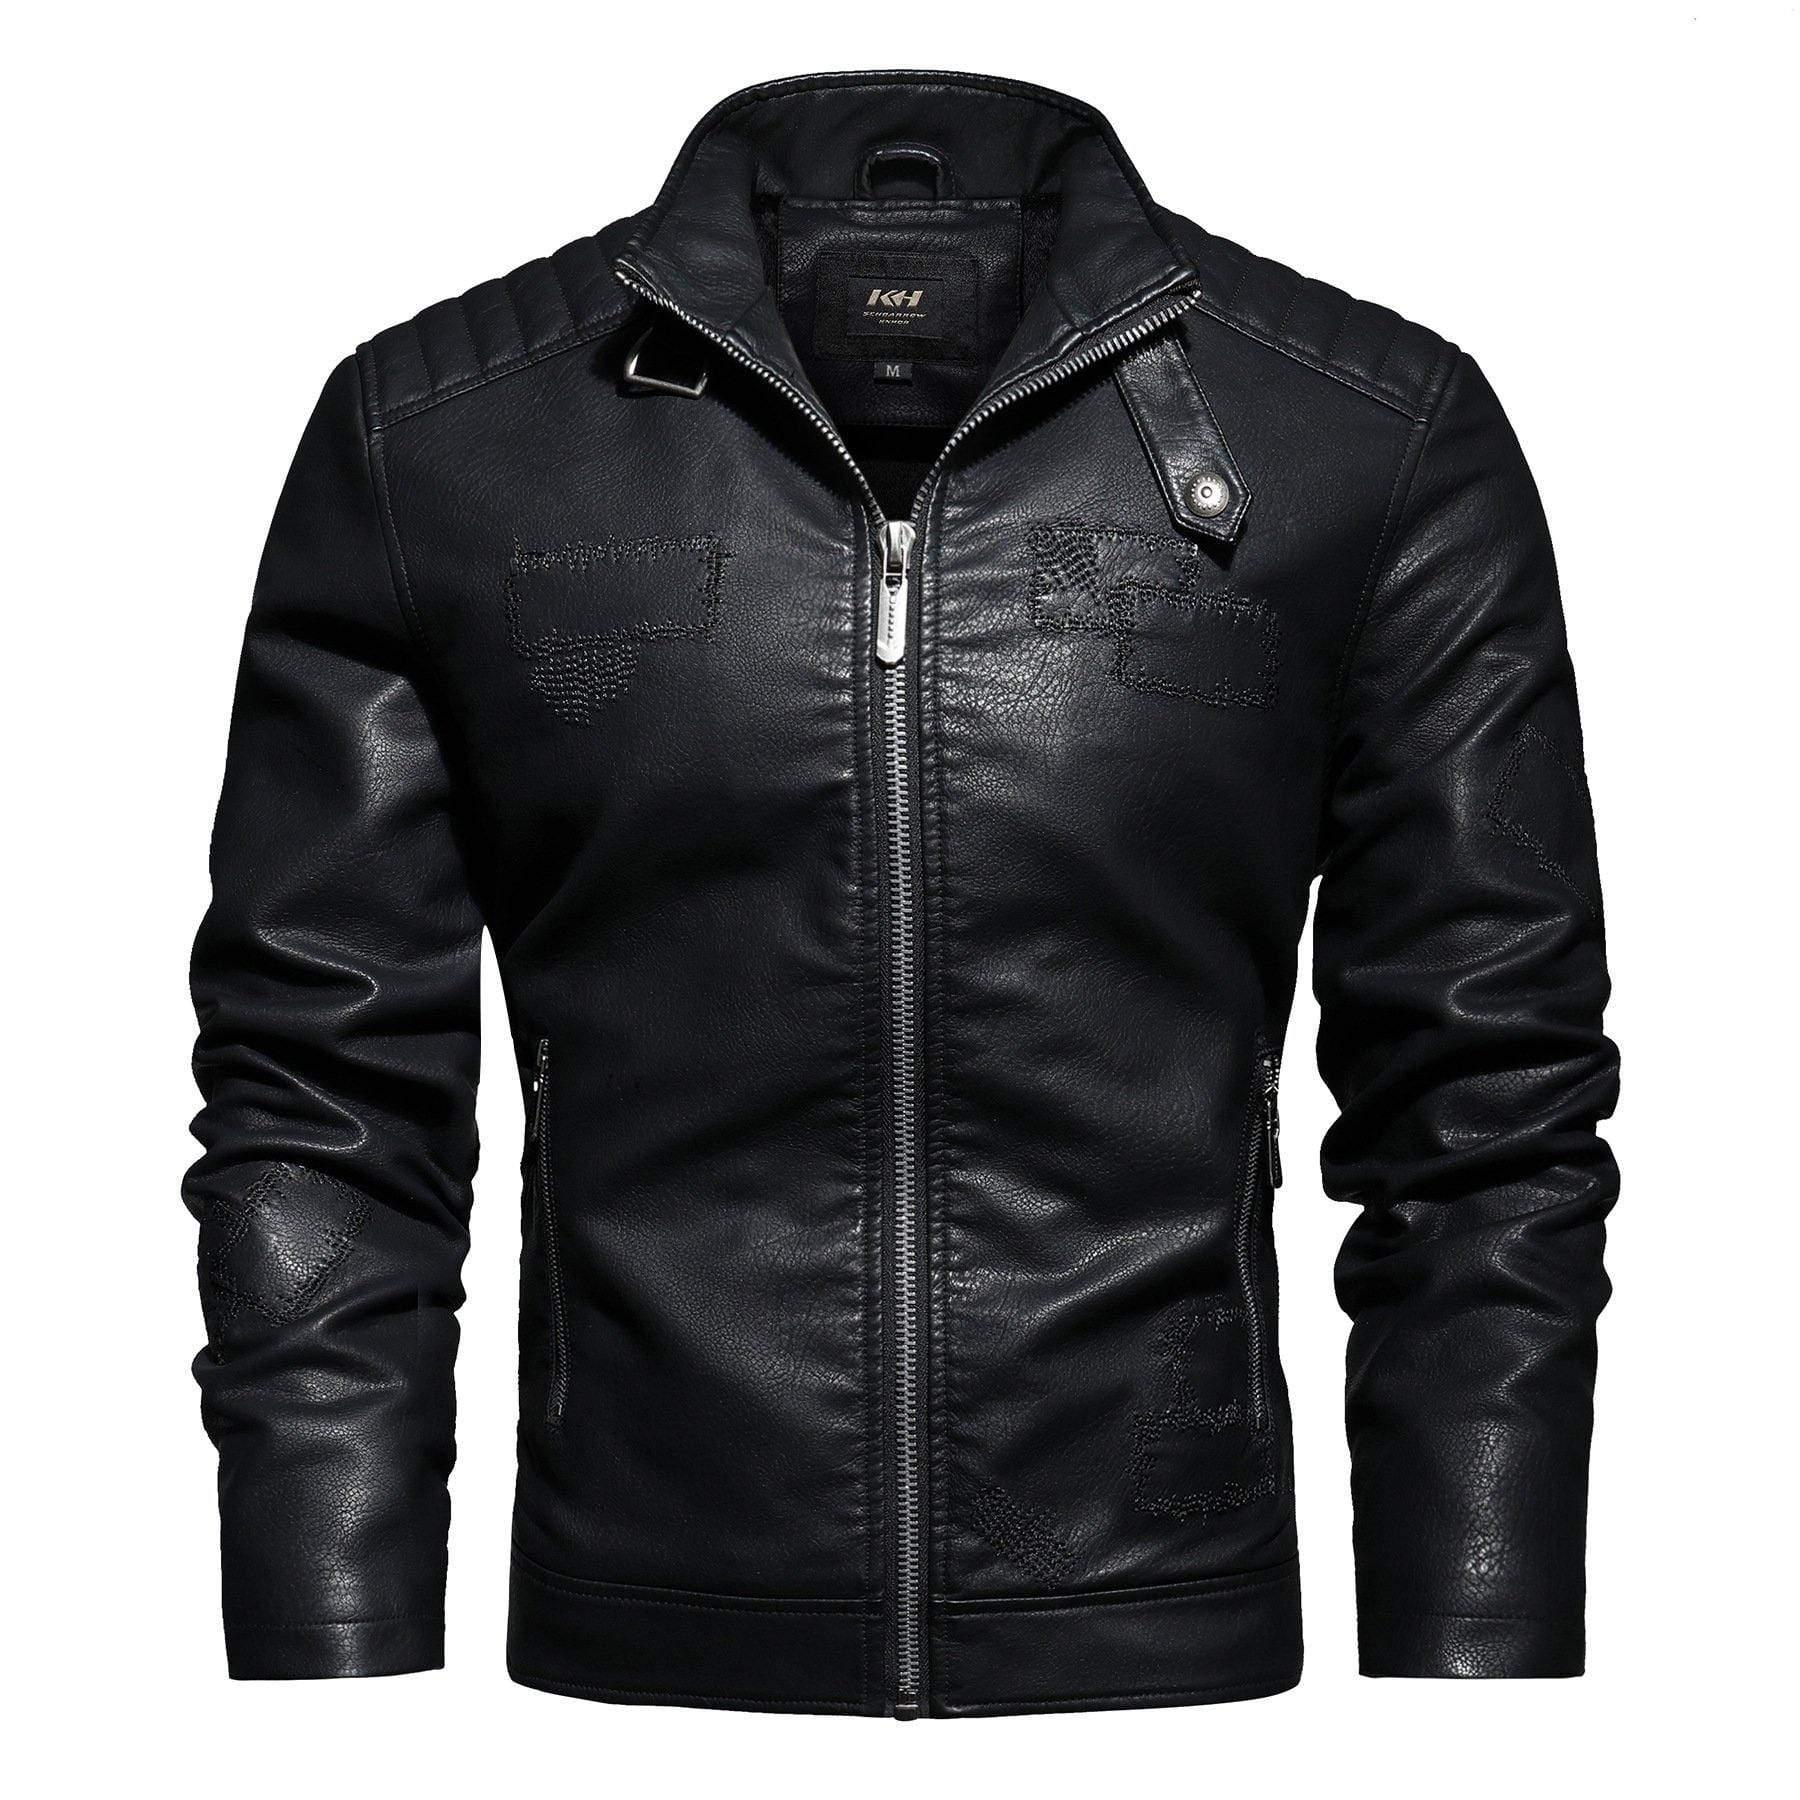 ezy2find men's leather jackets Black / 3XL Men's PU leather and velvet patch coat